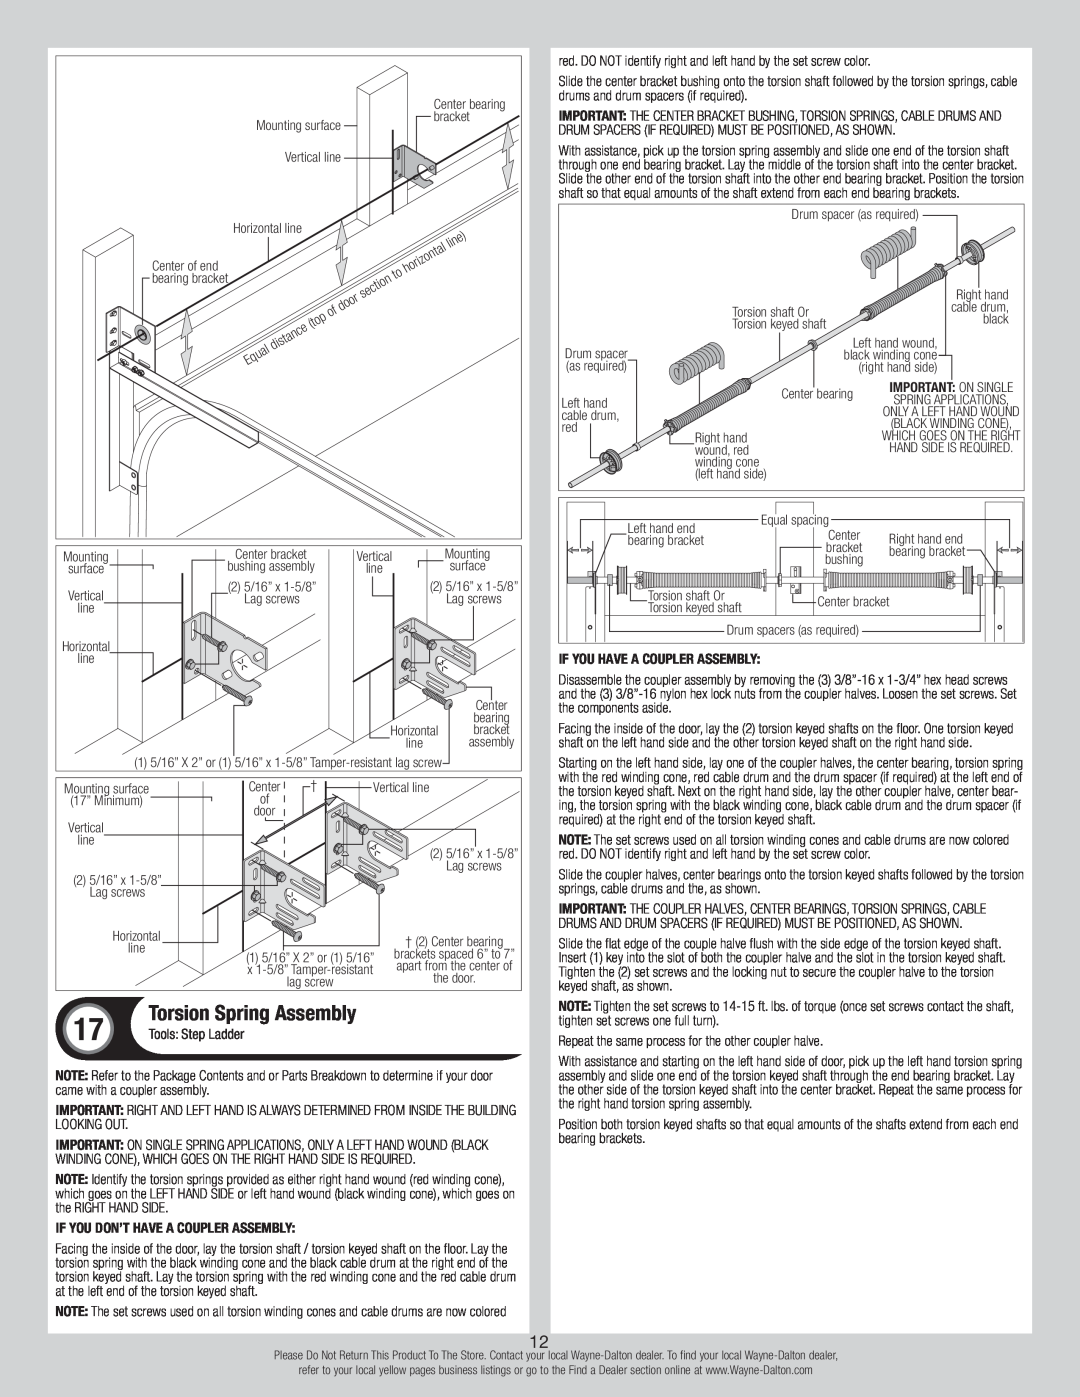 Wayne-Dalton 7100 Series installation instructions Torsion Spring Assembly 